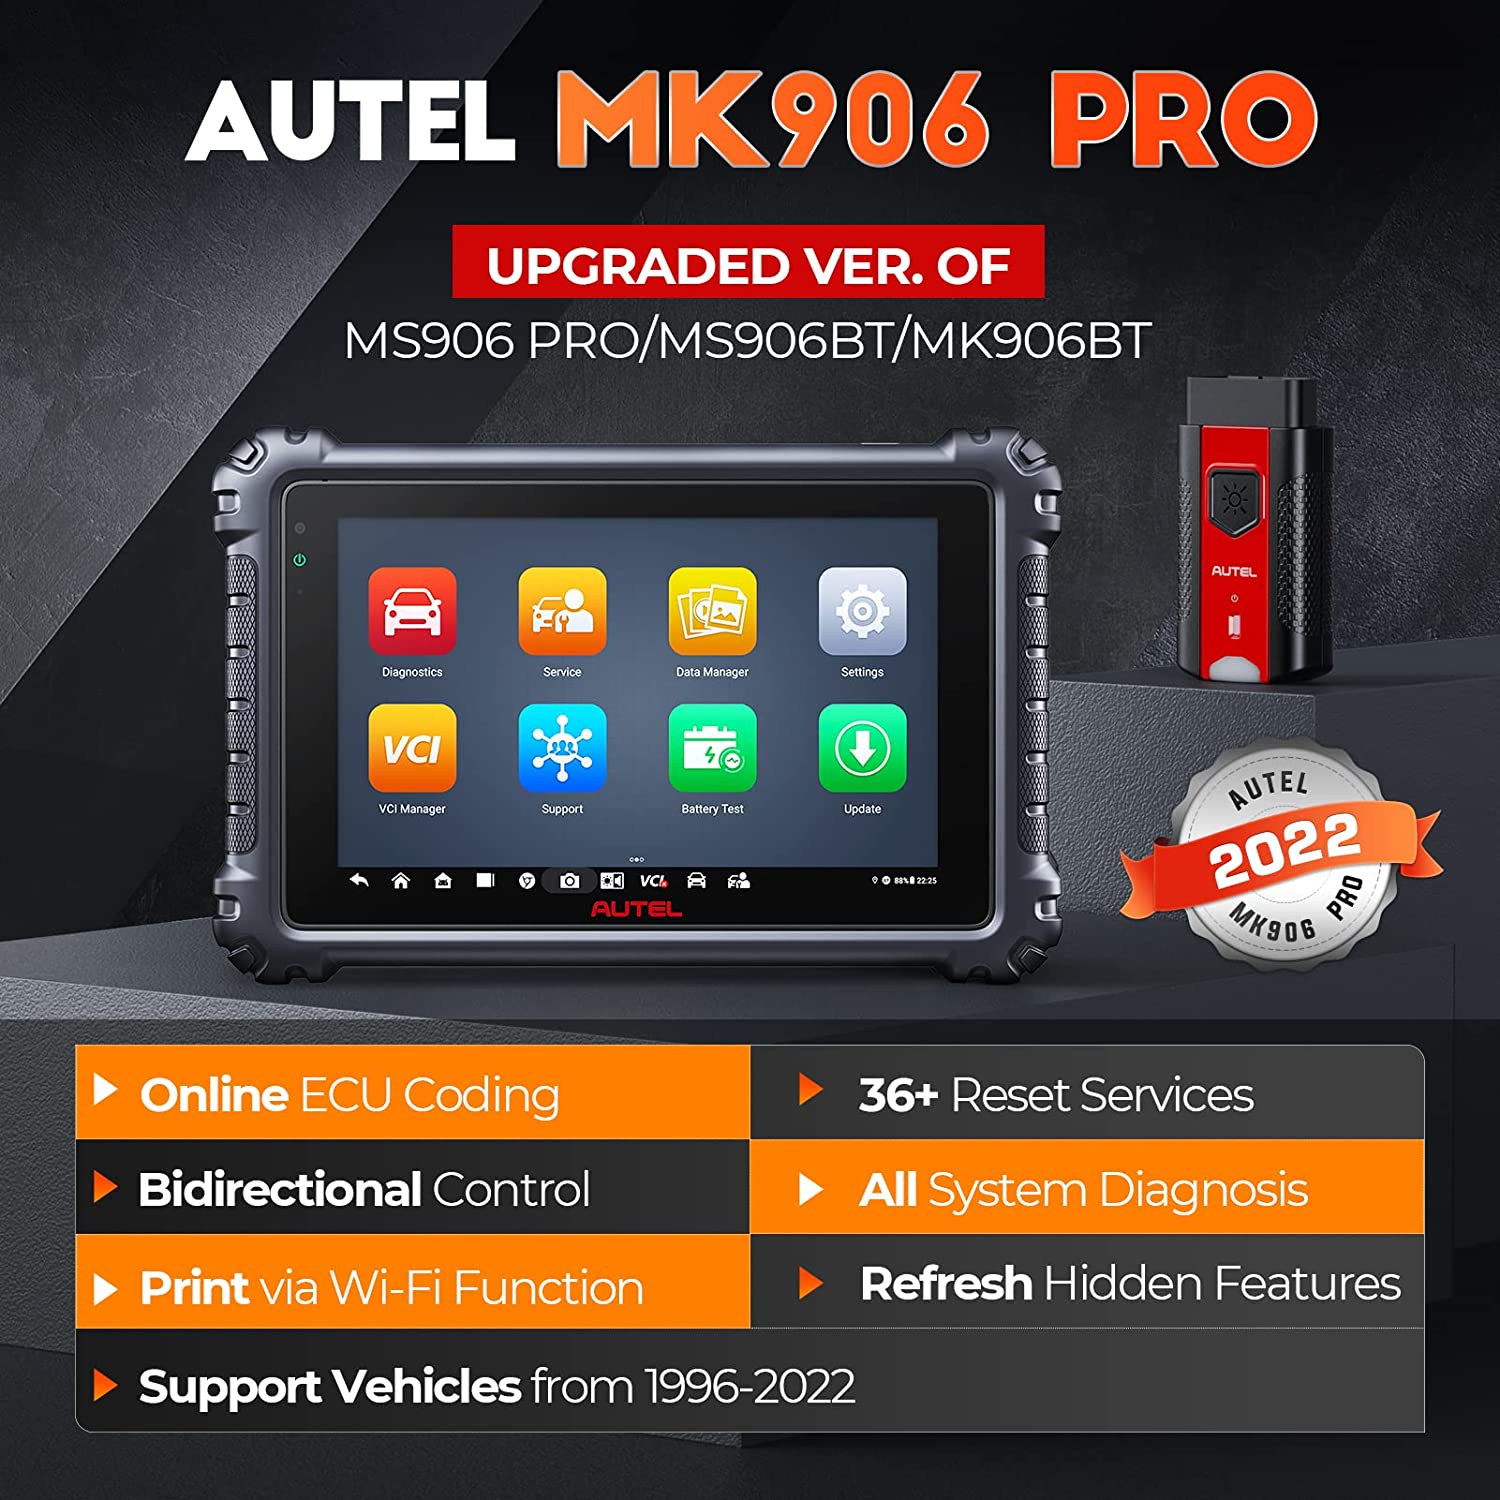 Autel MK906 Pro upgrated of MS906 Pro/MS906BT/MK906BT